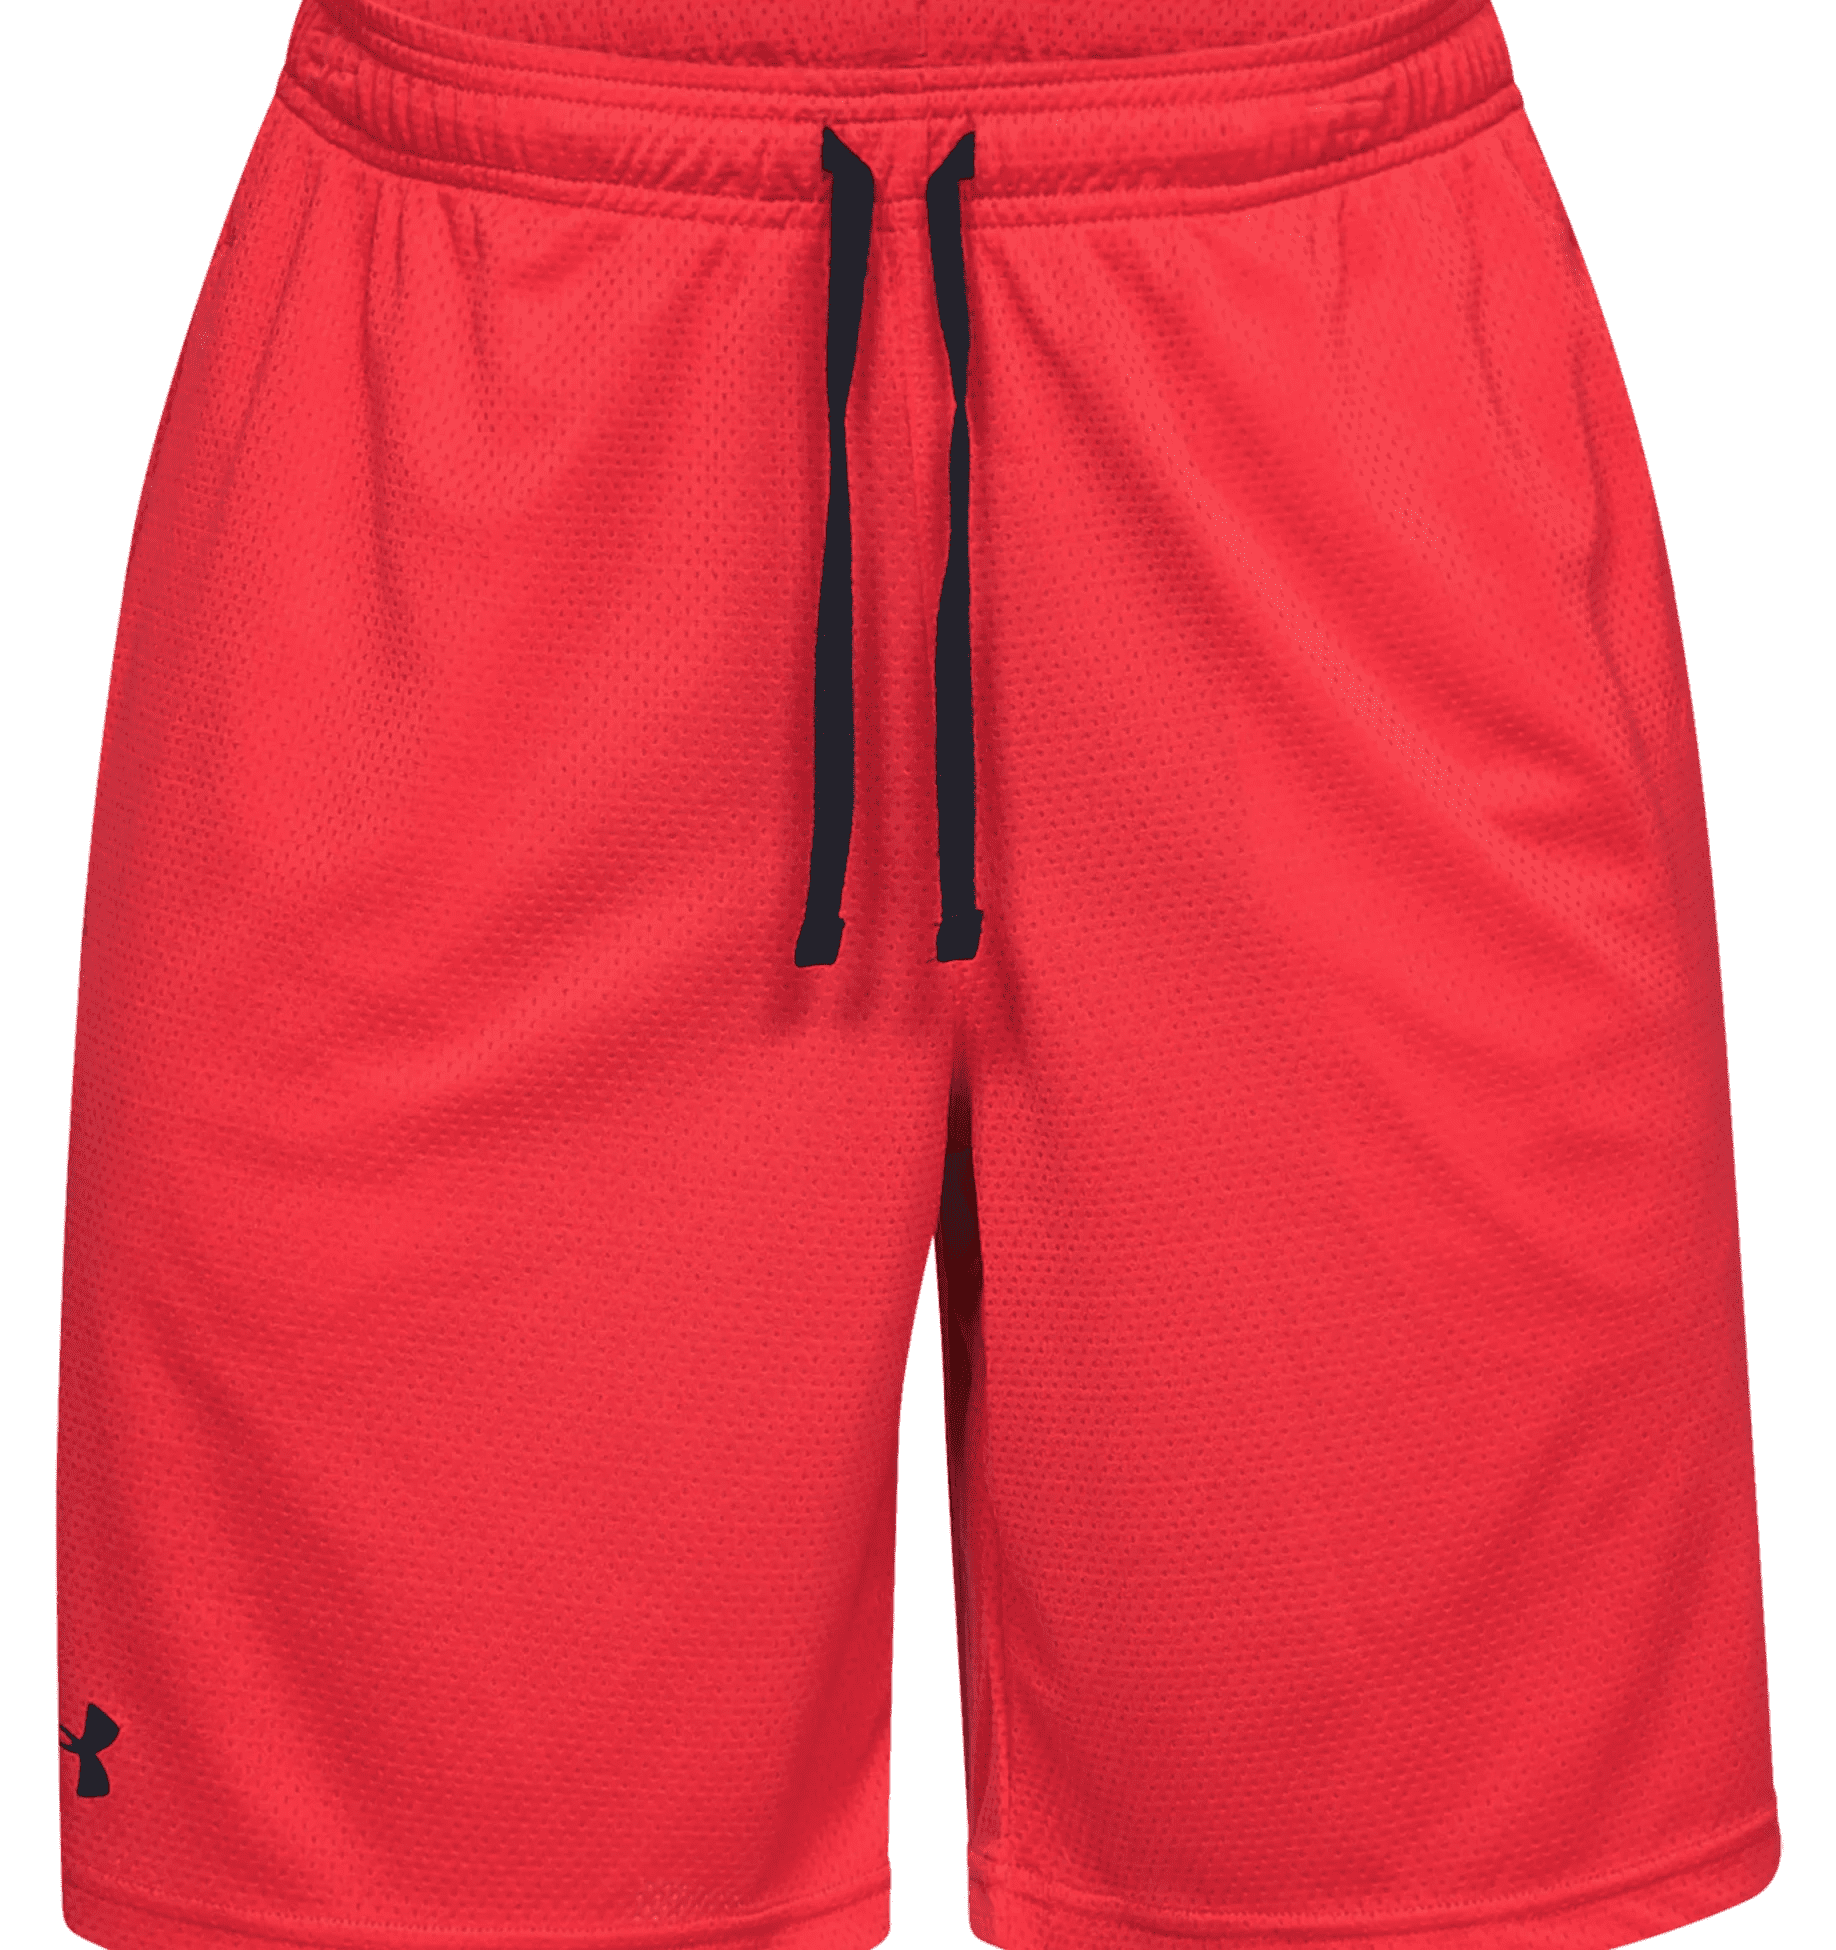 Under Armour Men's UA Tech™ Mesh Shorts 1328705 - Red, L